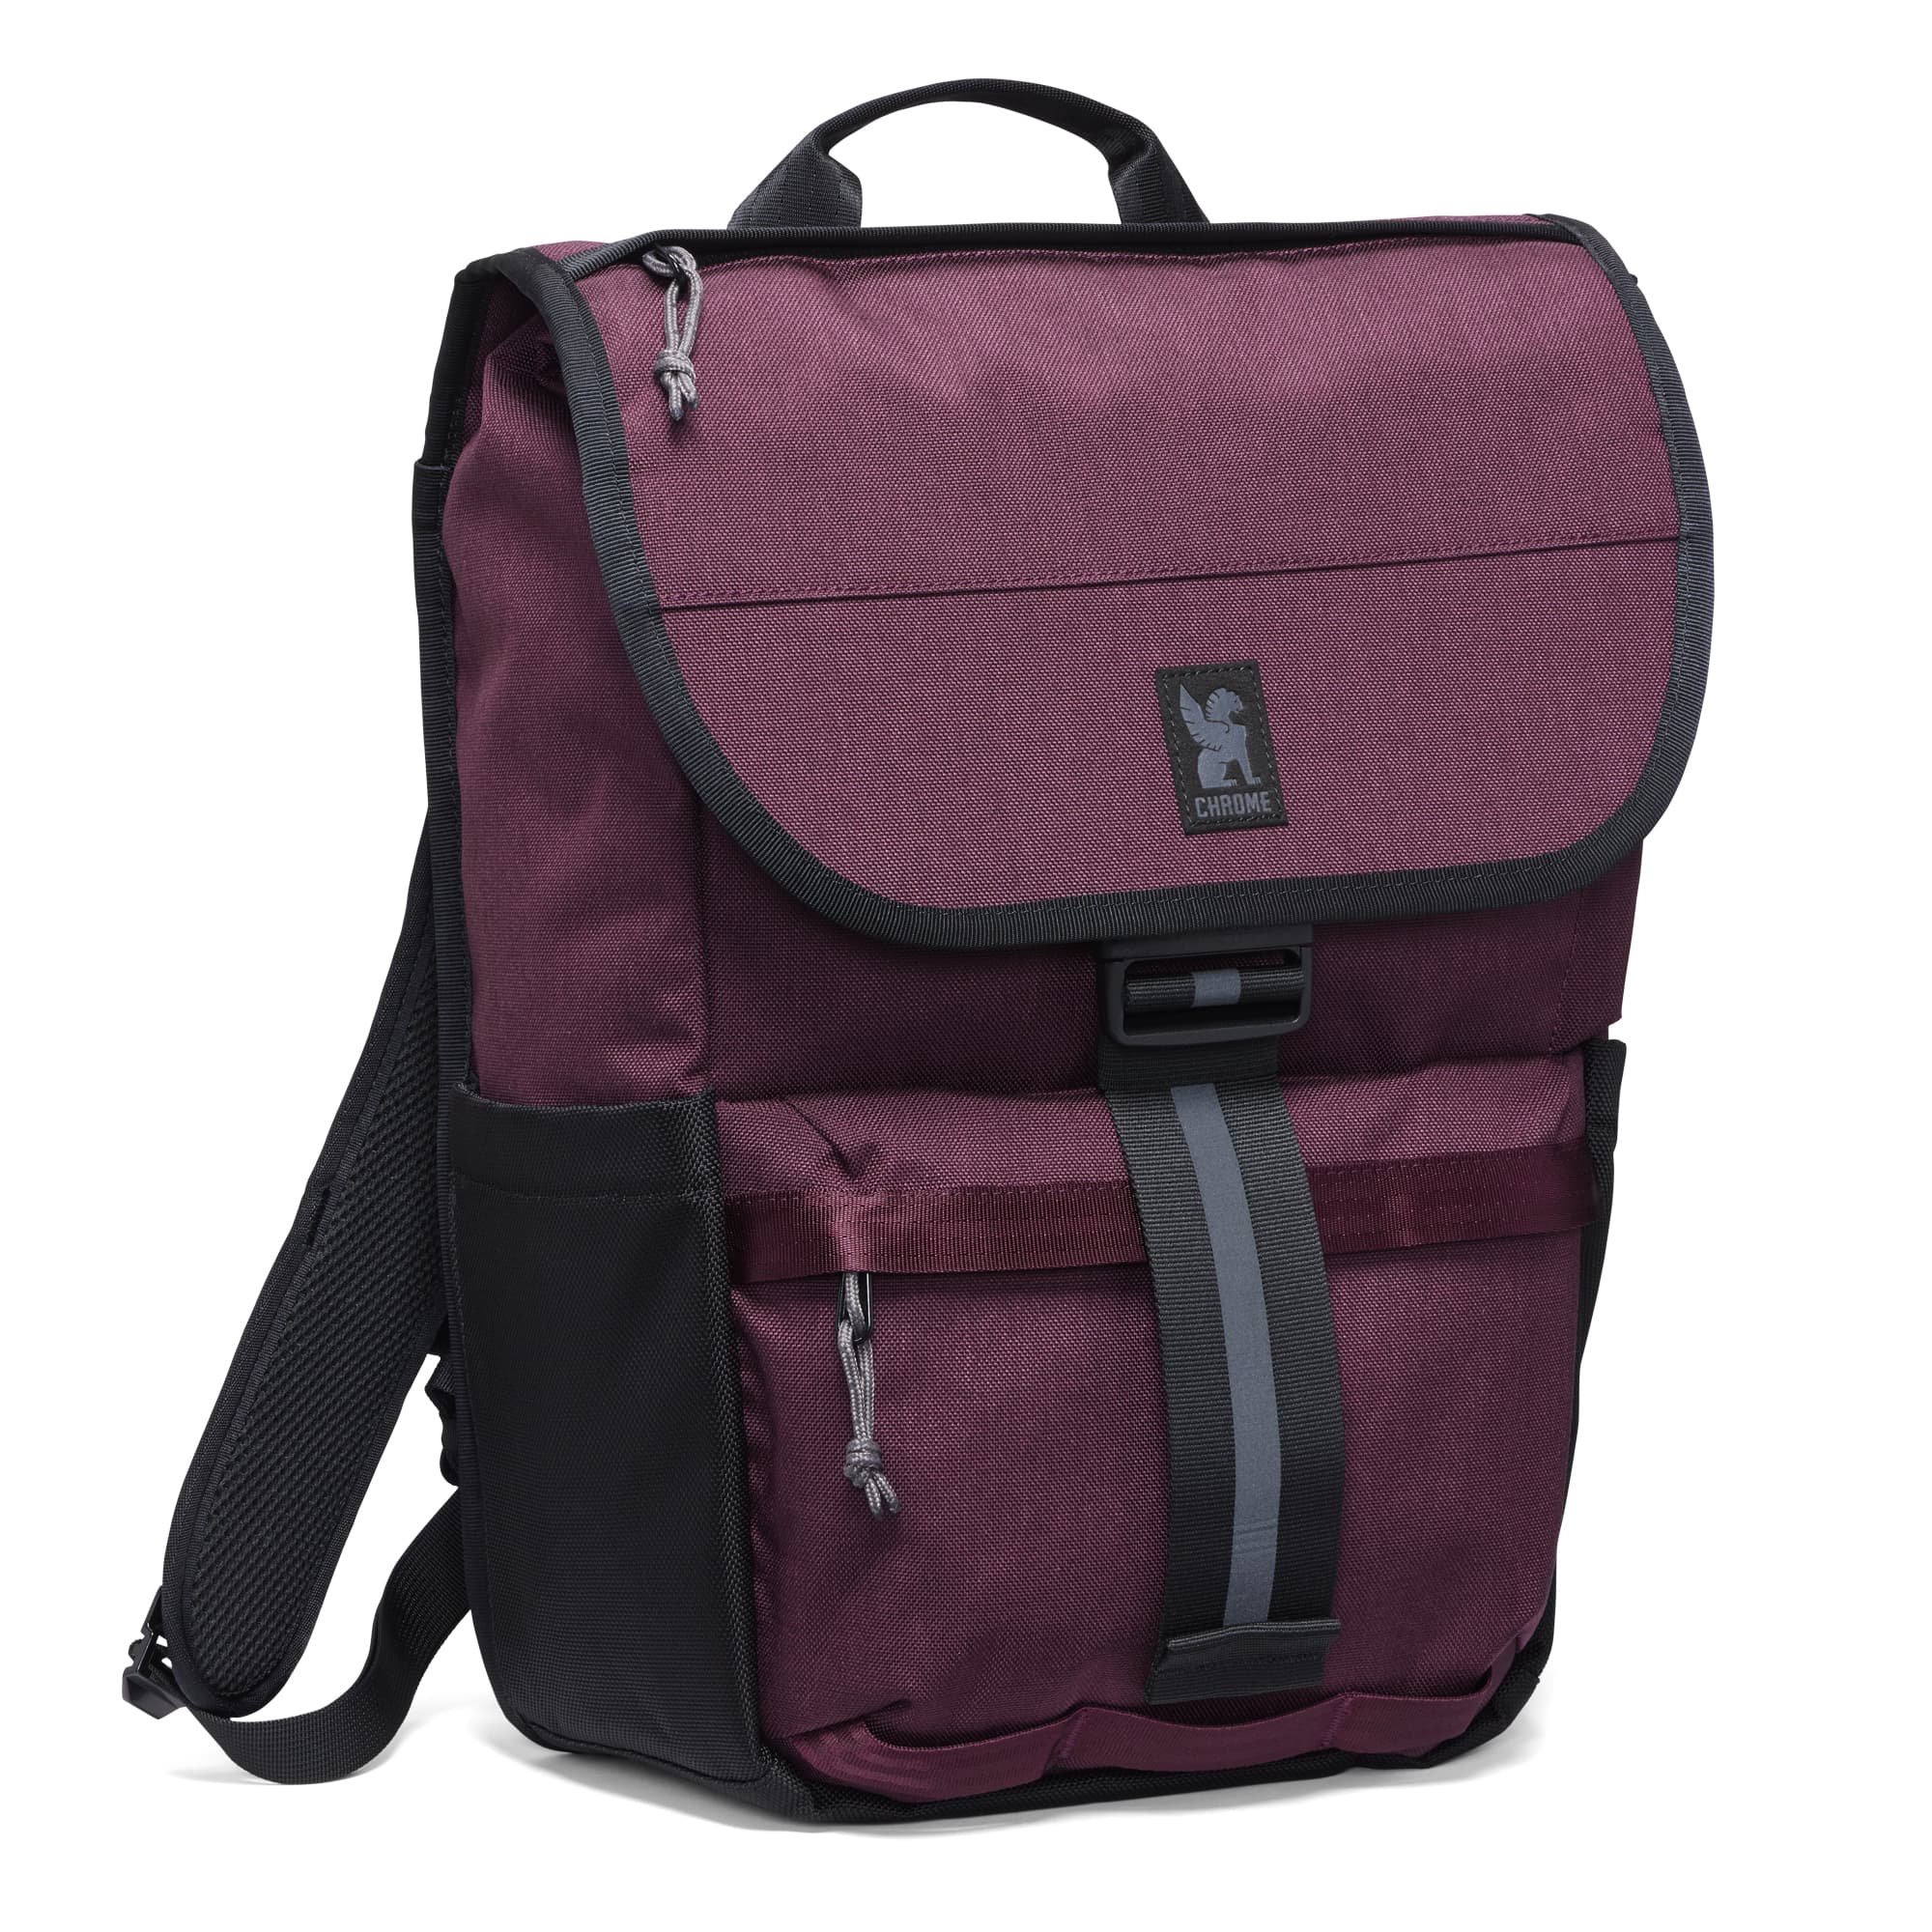 Corbet 24L backpack in purple #color_royale